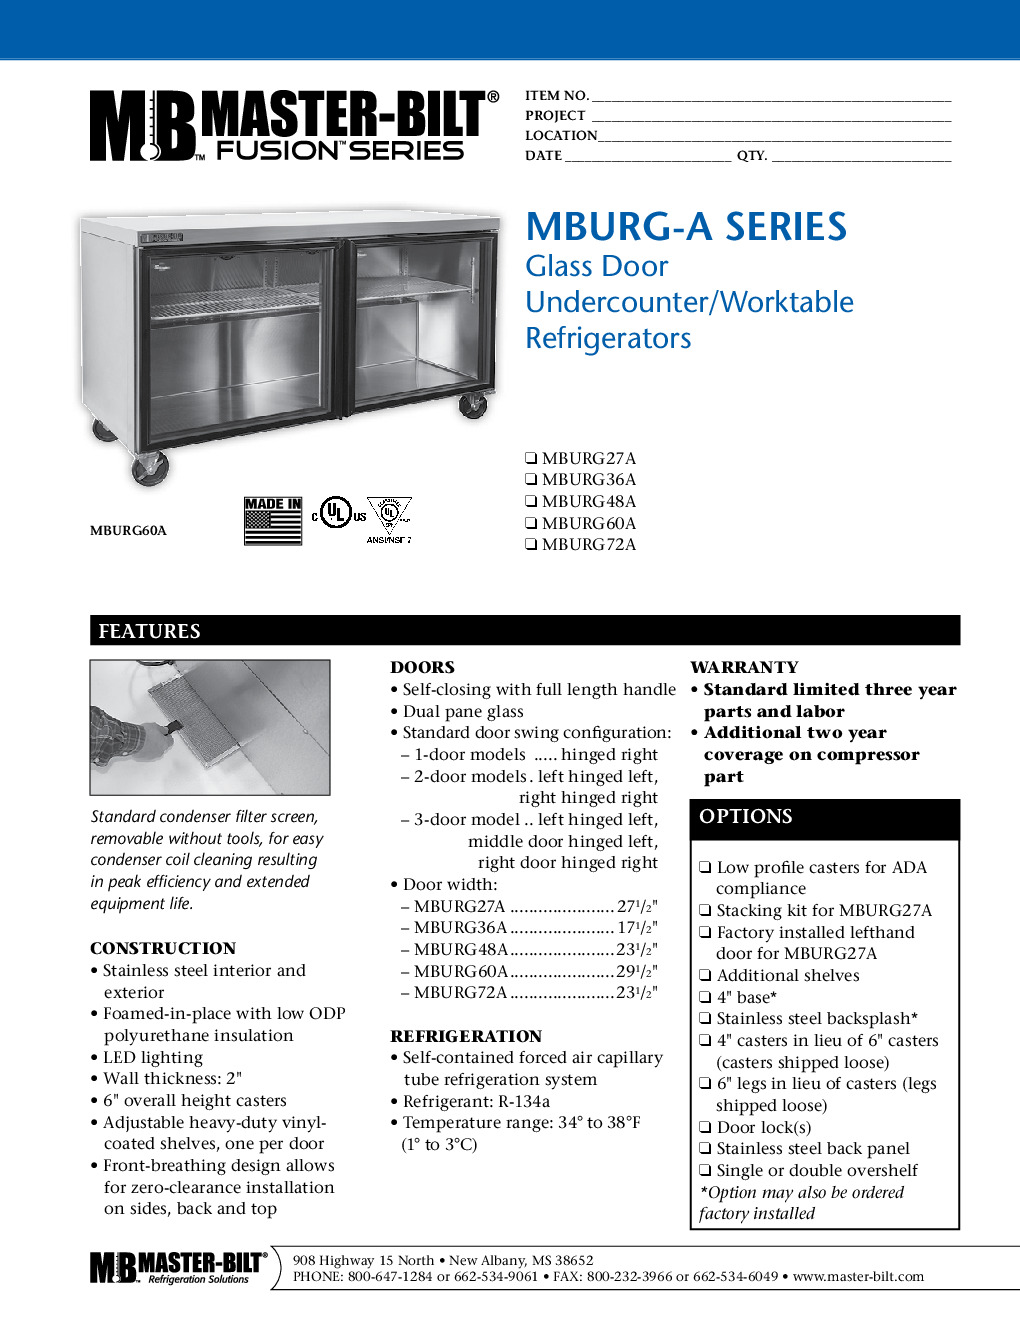 Master-Bilt MBURG36A Reach-In Undercounter Refrigerator